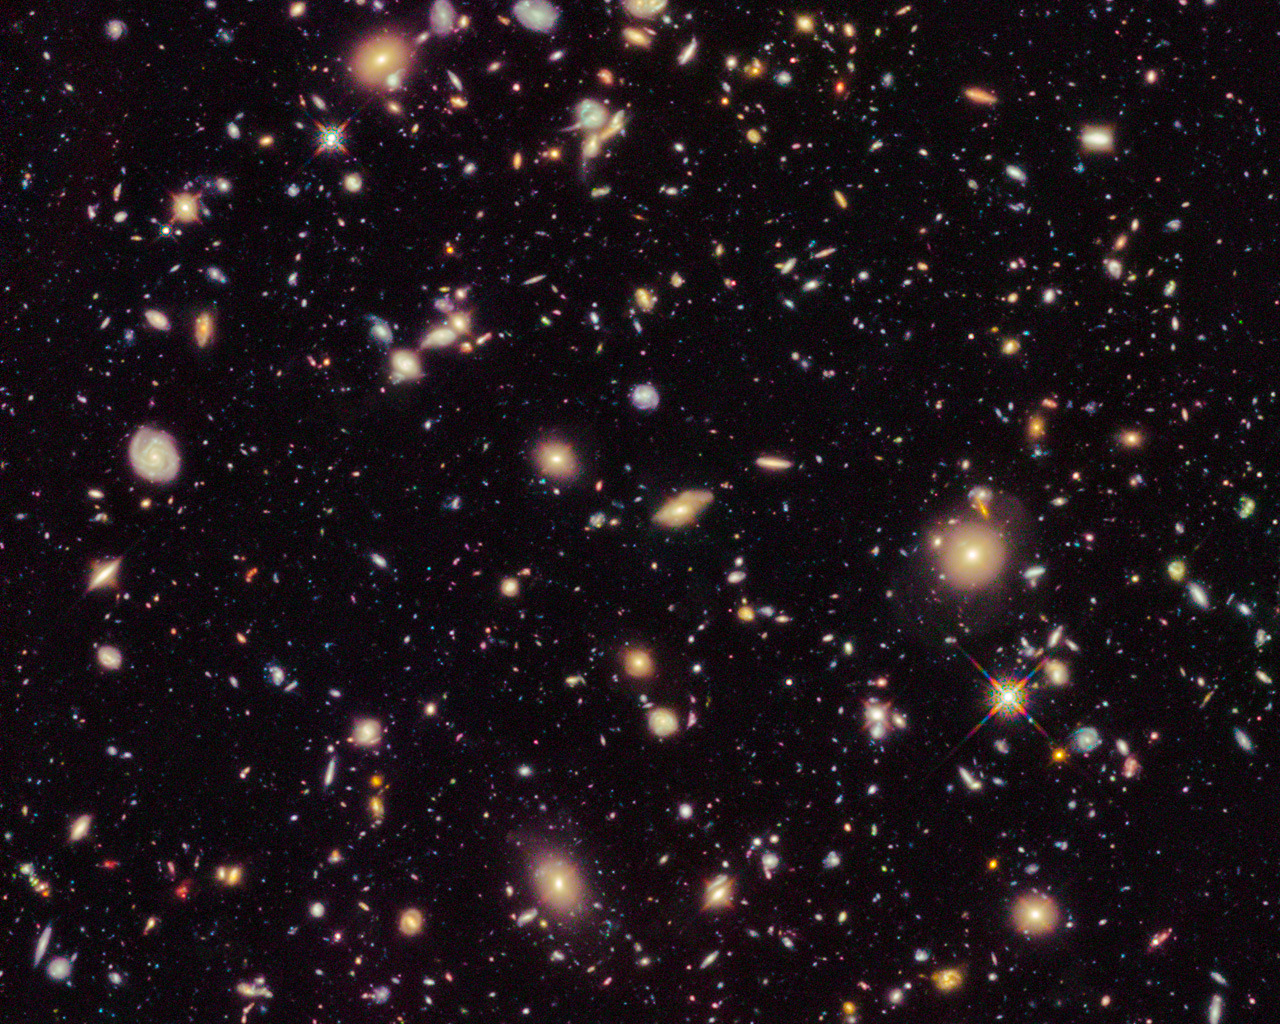 galaxies away faster than light?